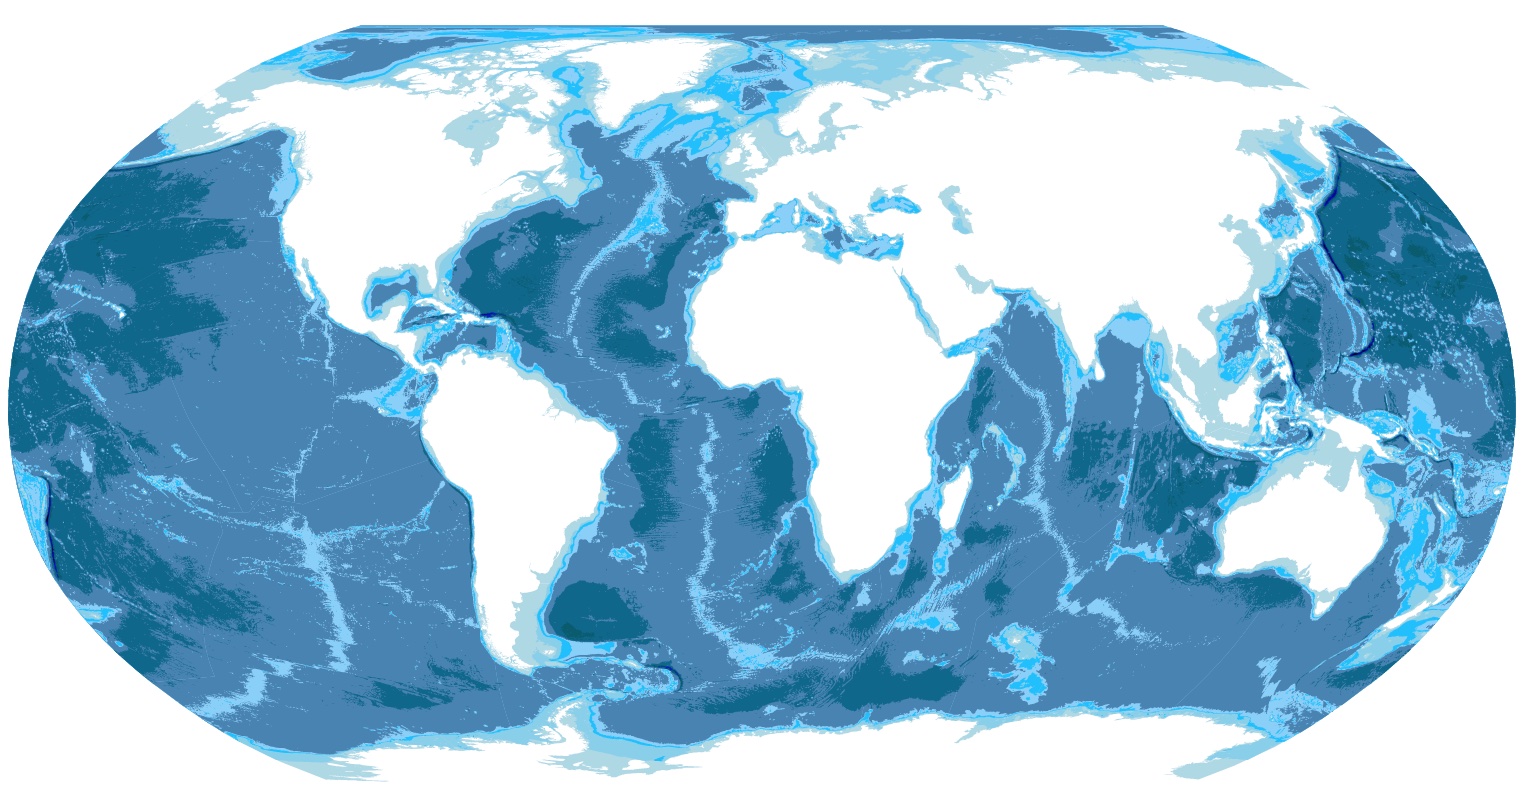 Map of Seafloor showing ocean ridges